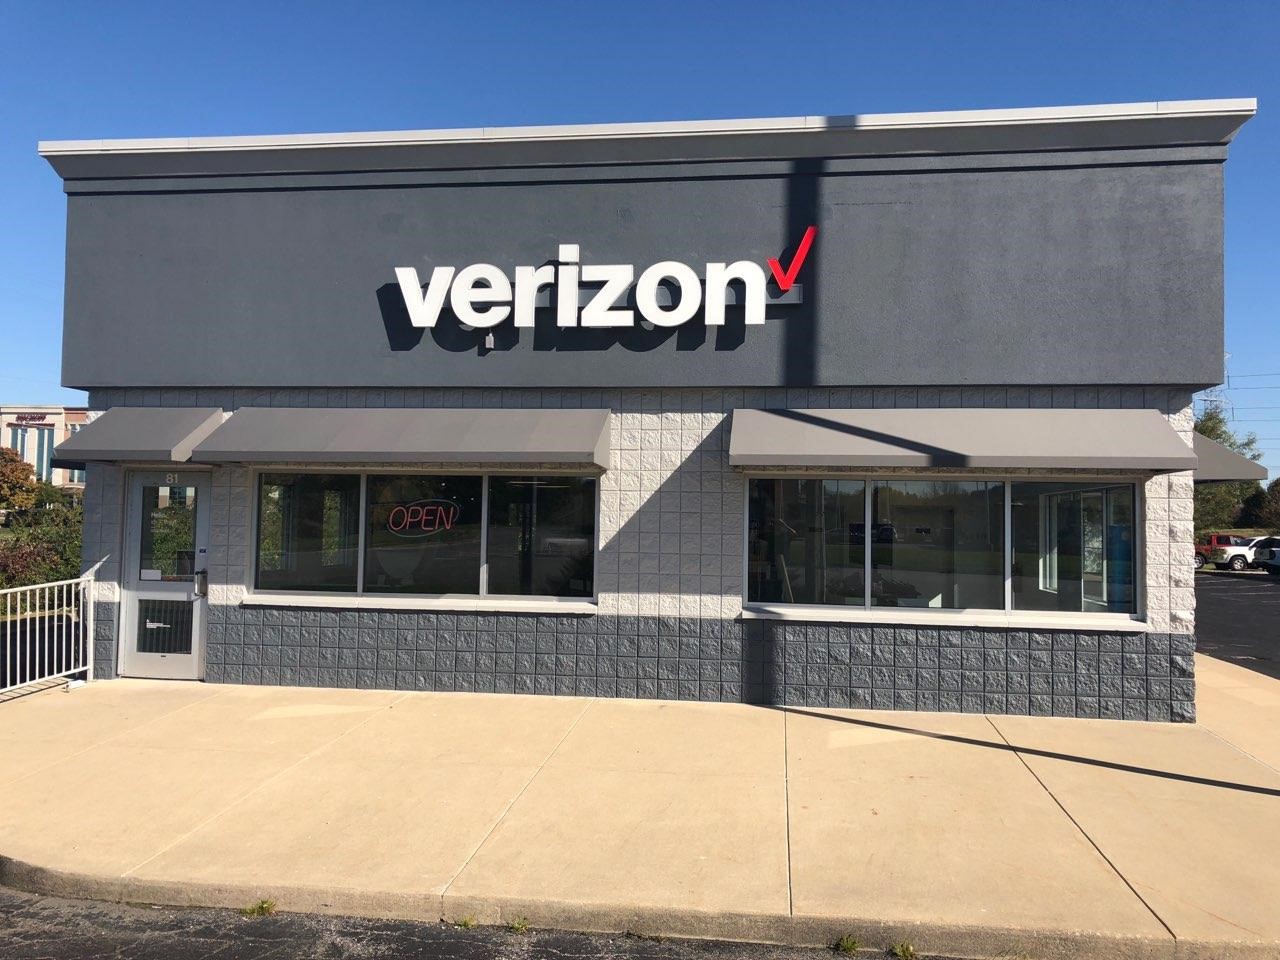 TCC, Verizon Authorized Retailer
81 N State Road 135
Greenwood, IN